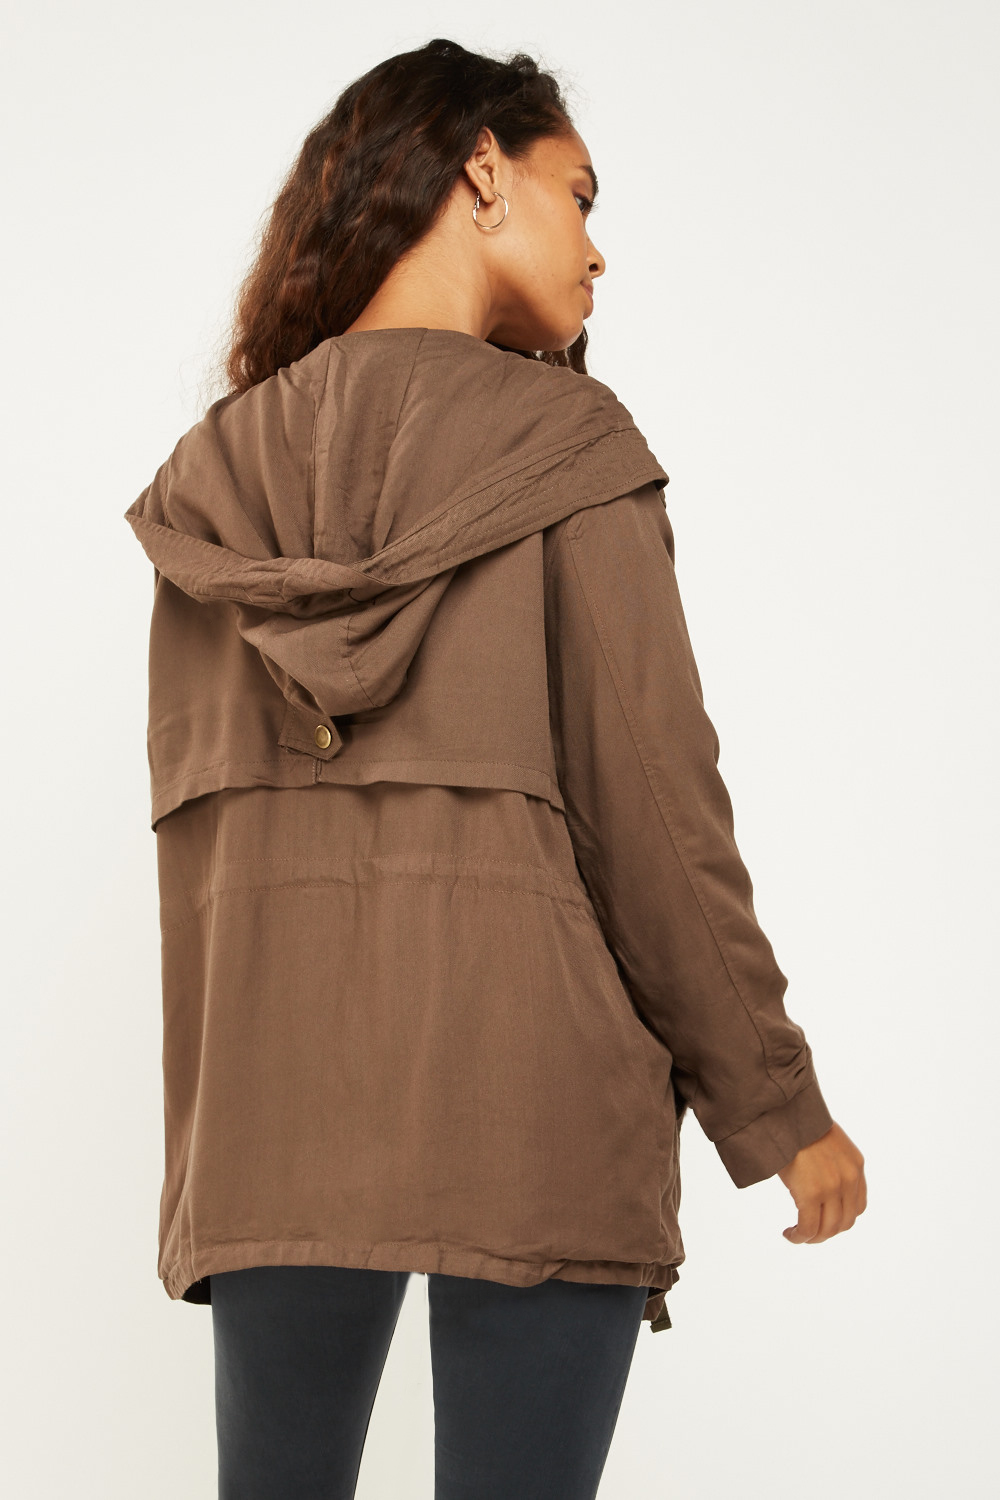 Zip Up Hooded Parka Jacket - Just $7